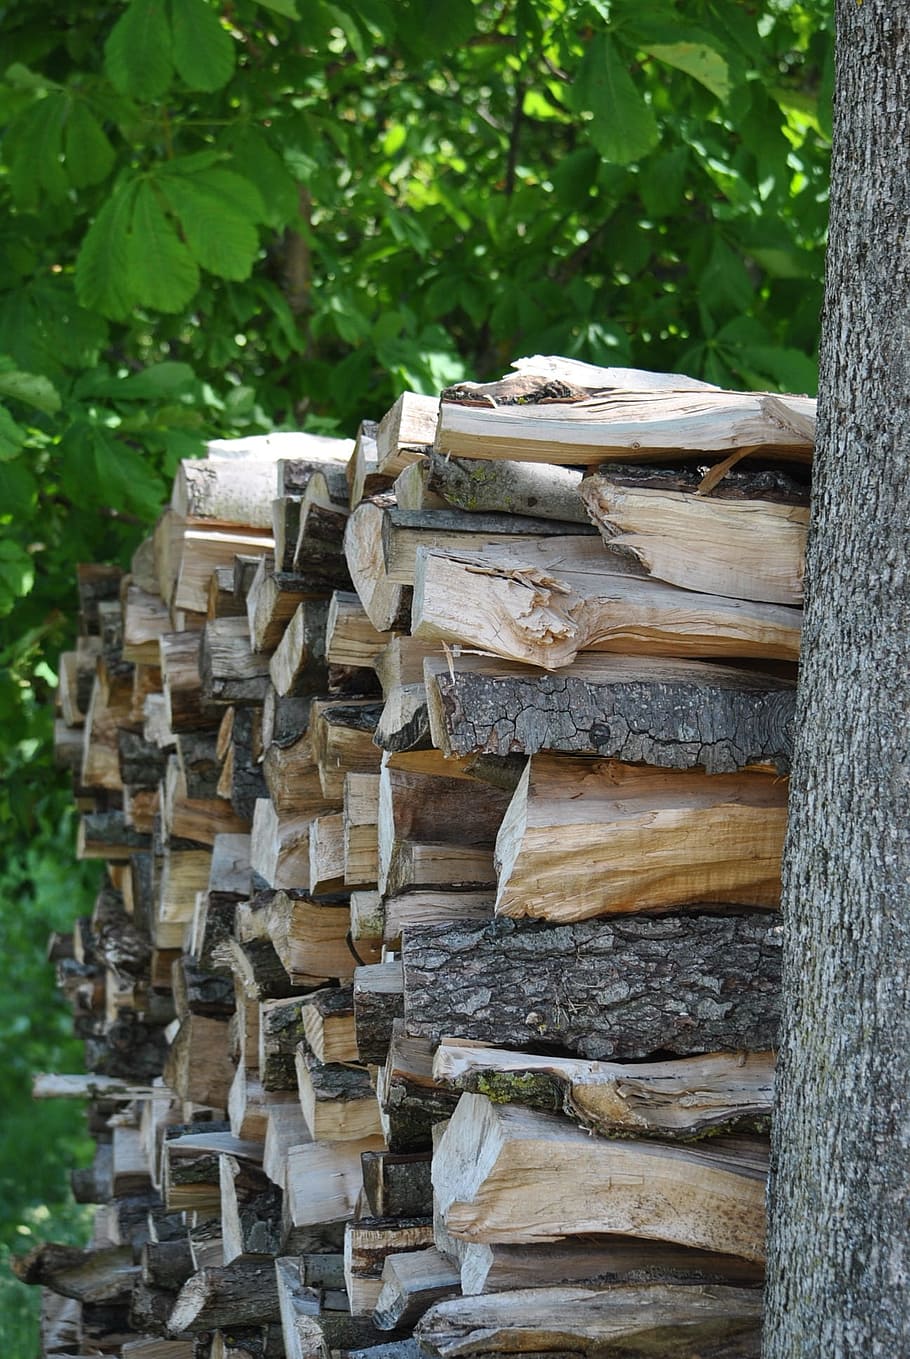 madera, leña, peines para cortar hilos, troncos, aserrados, madera - material, árbol, bosque, pila, tronco